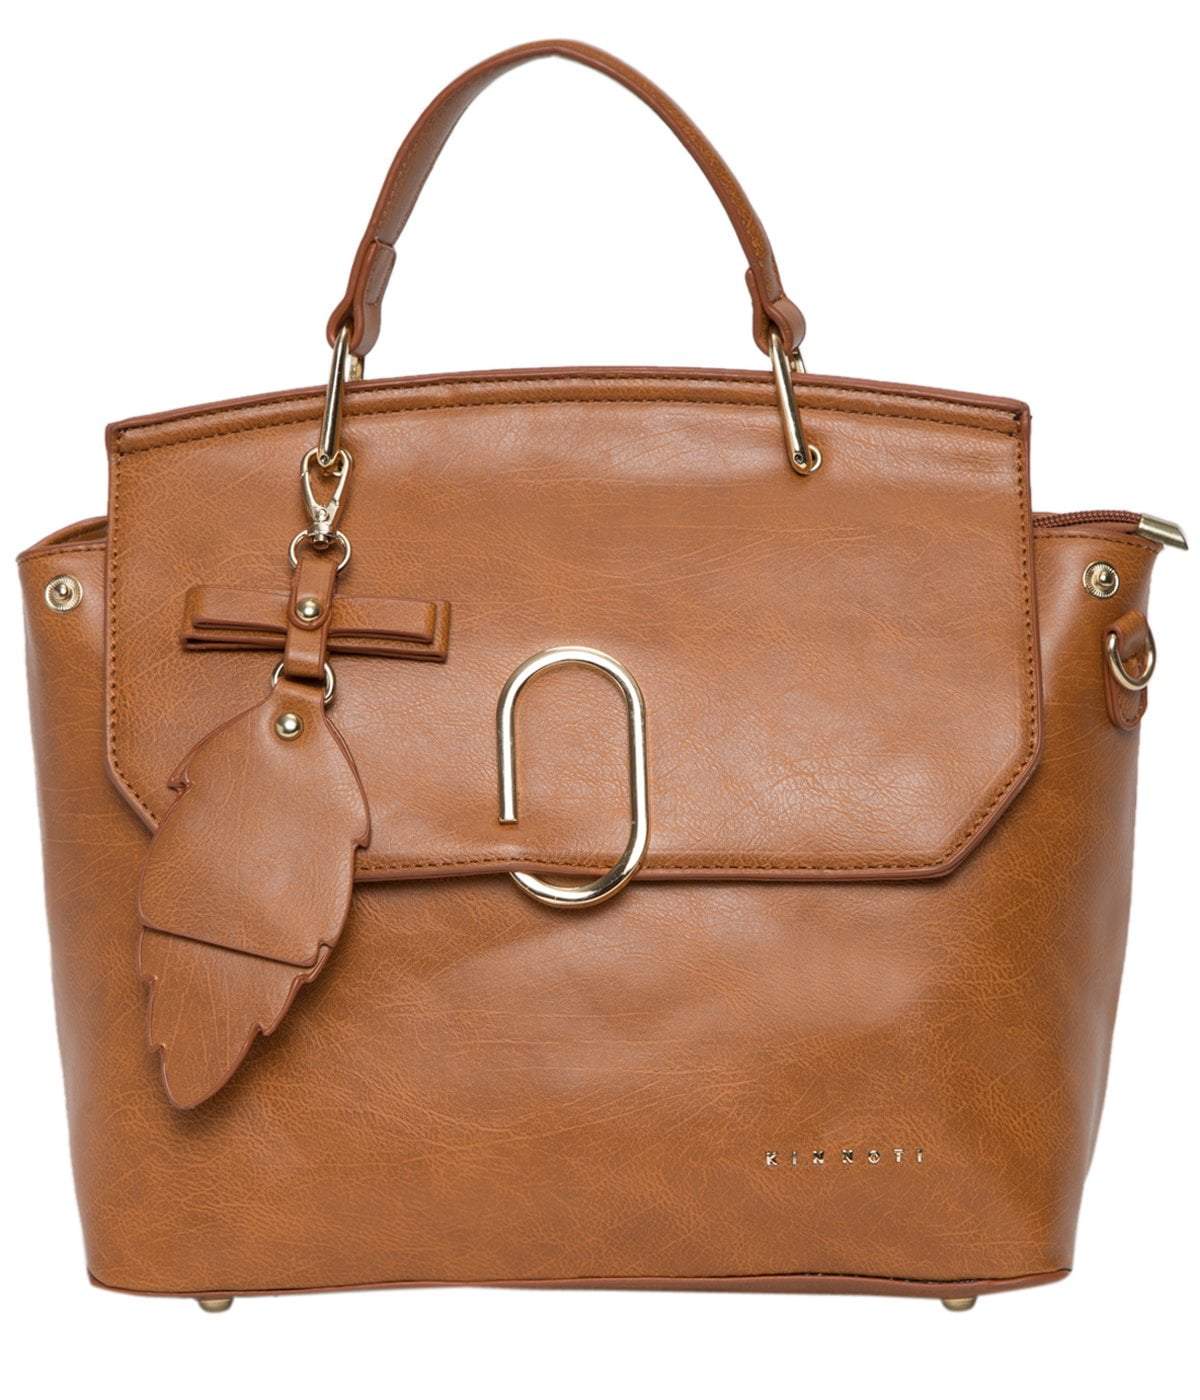 kinnoti Brown Leather Satchel Bag